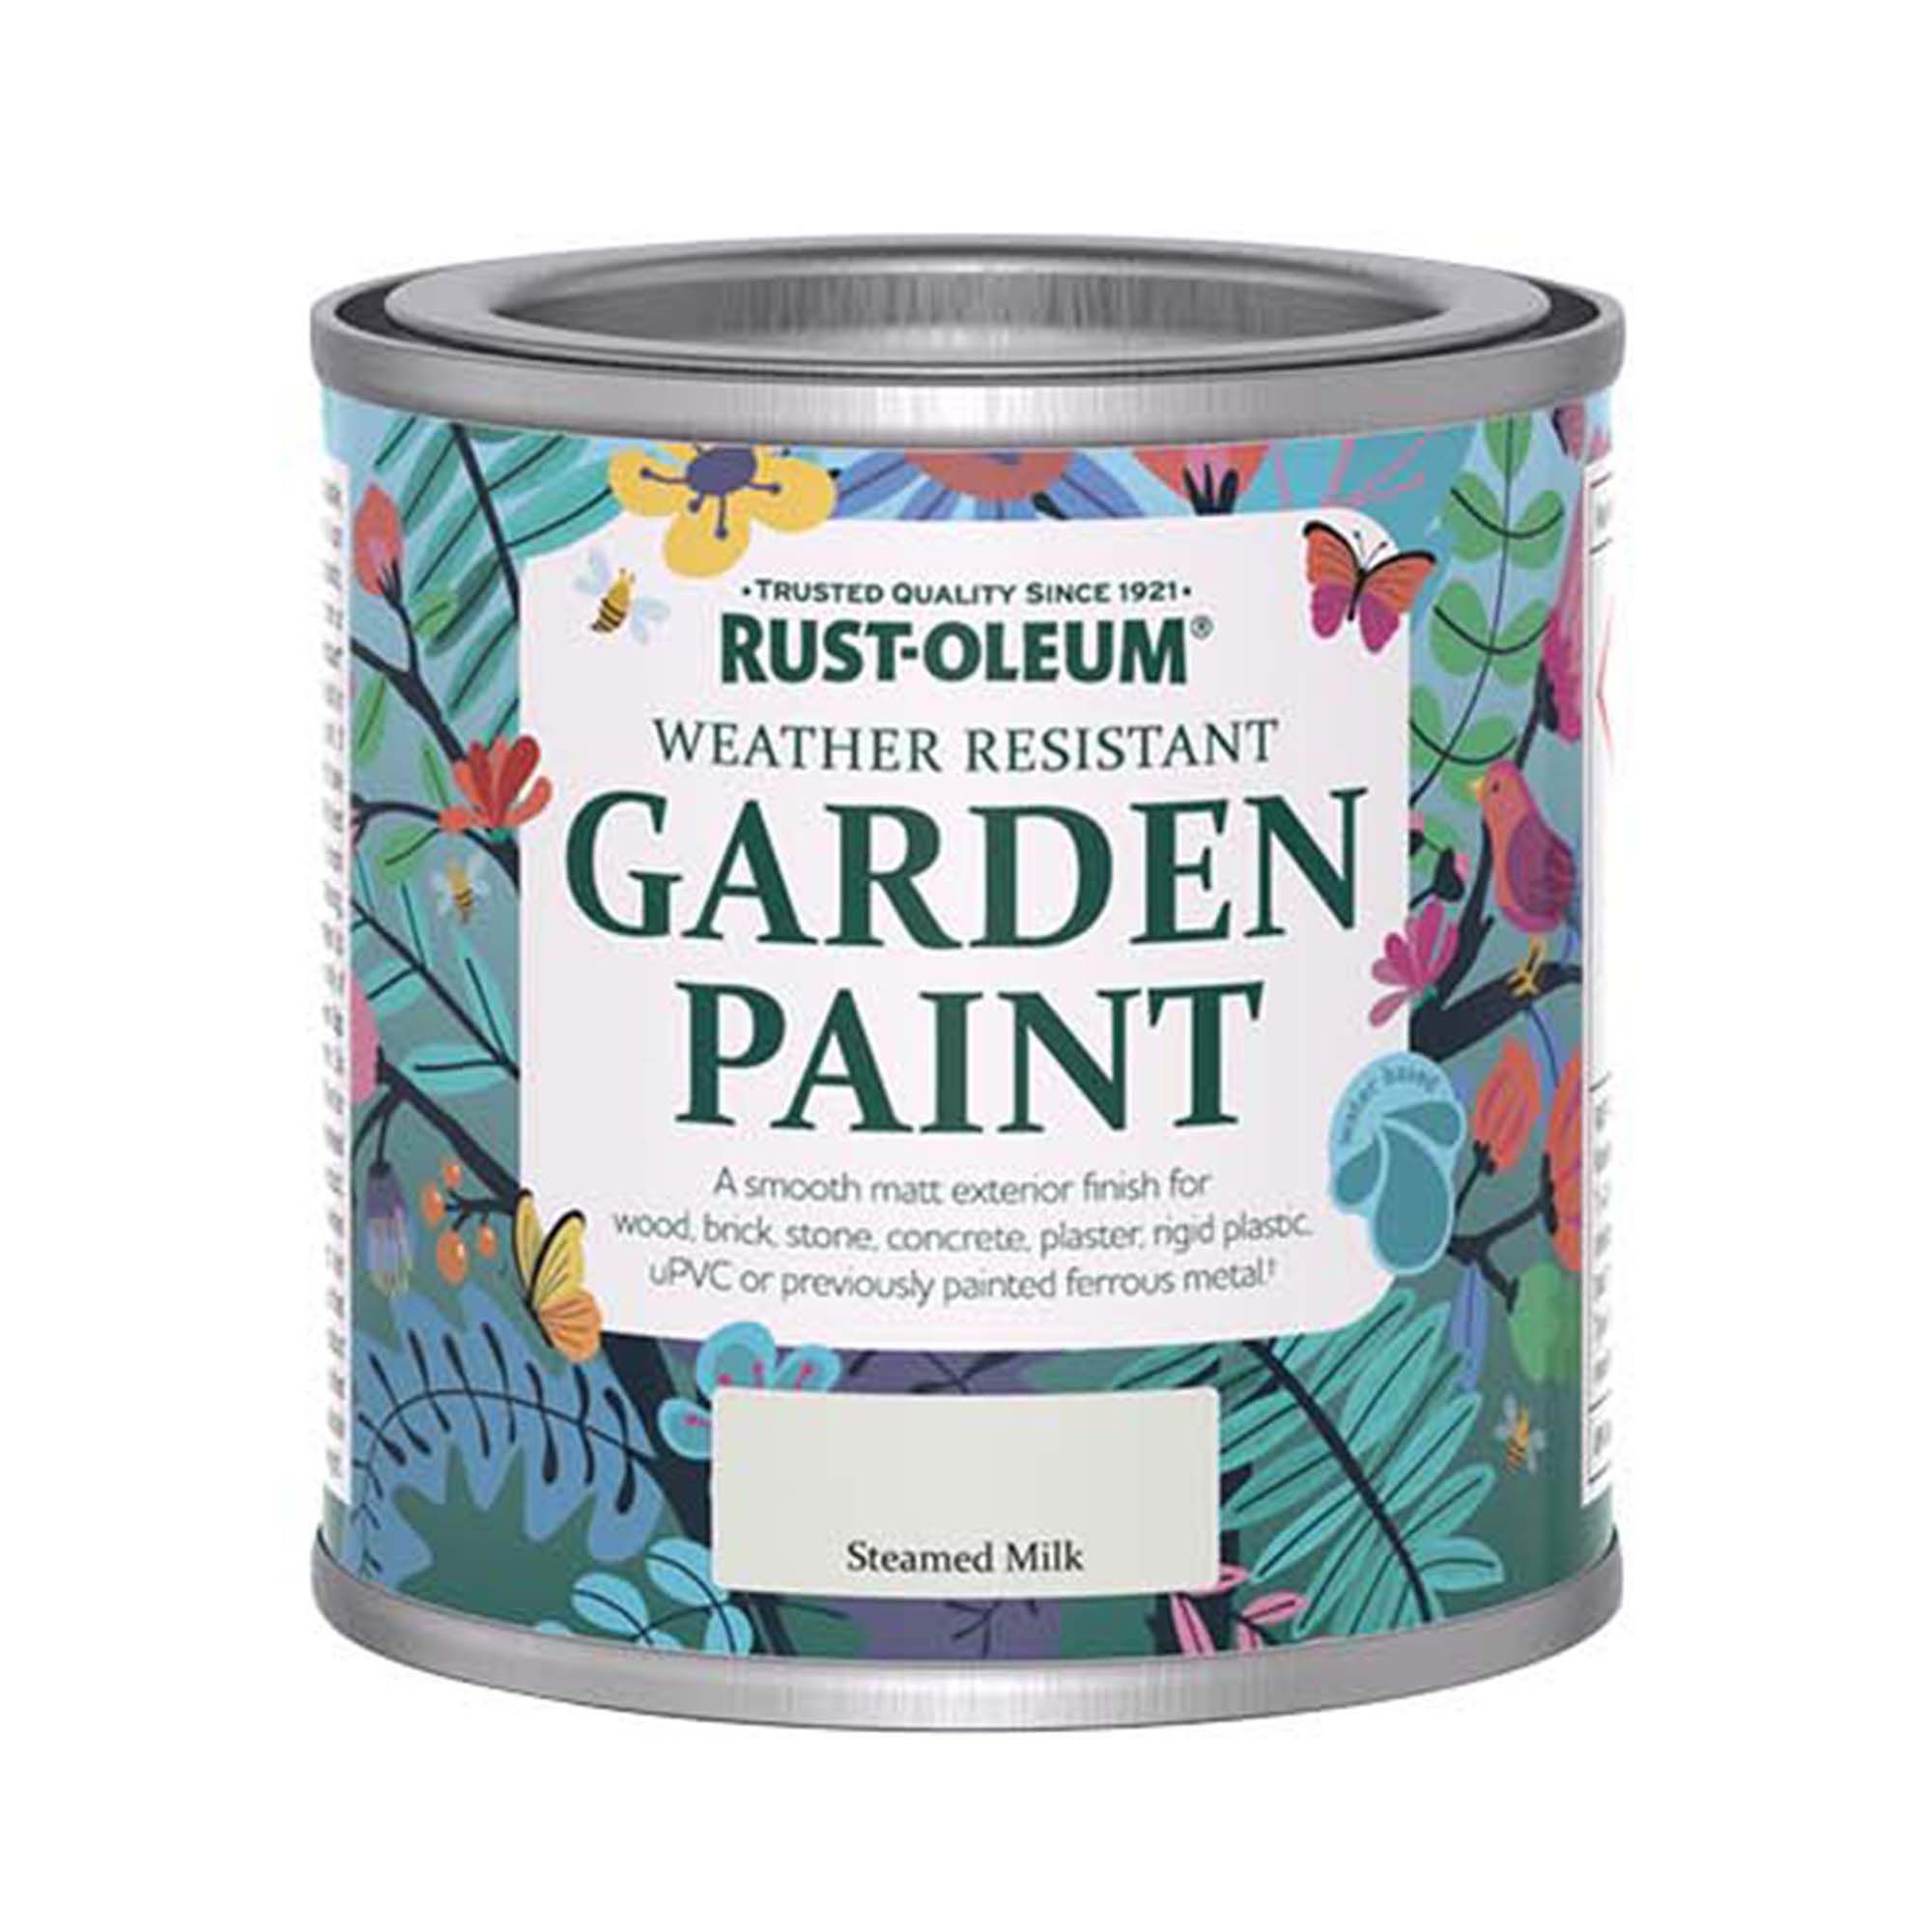 Rust-Oleum Garden Paint Steamed Milk Matt Multi-surface Garden Paint, 125ml Tin